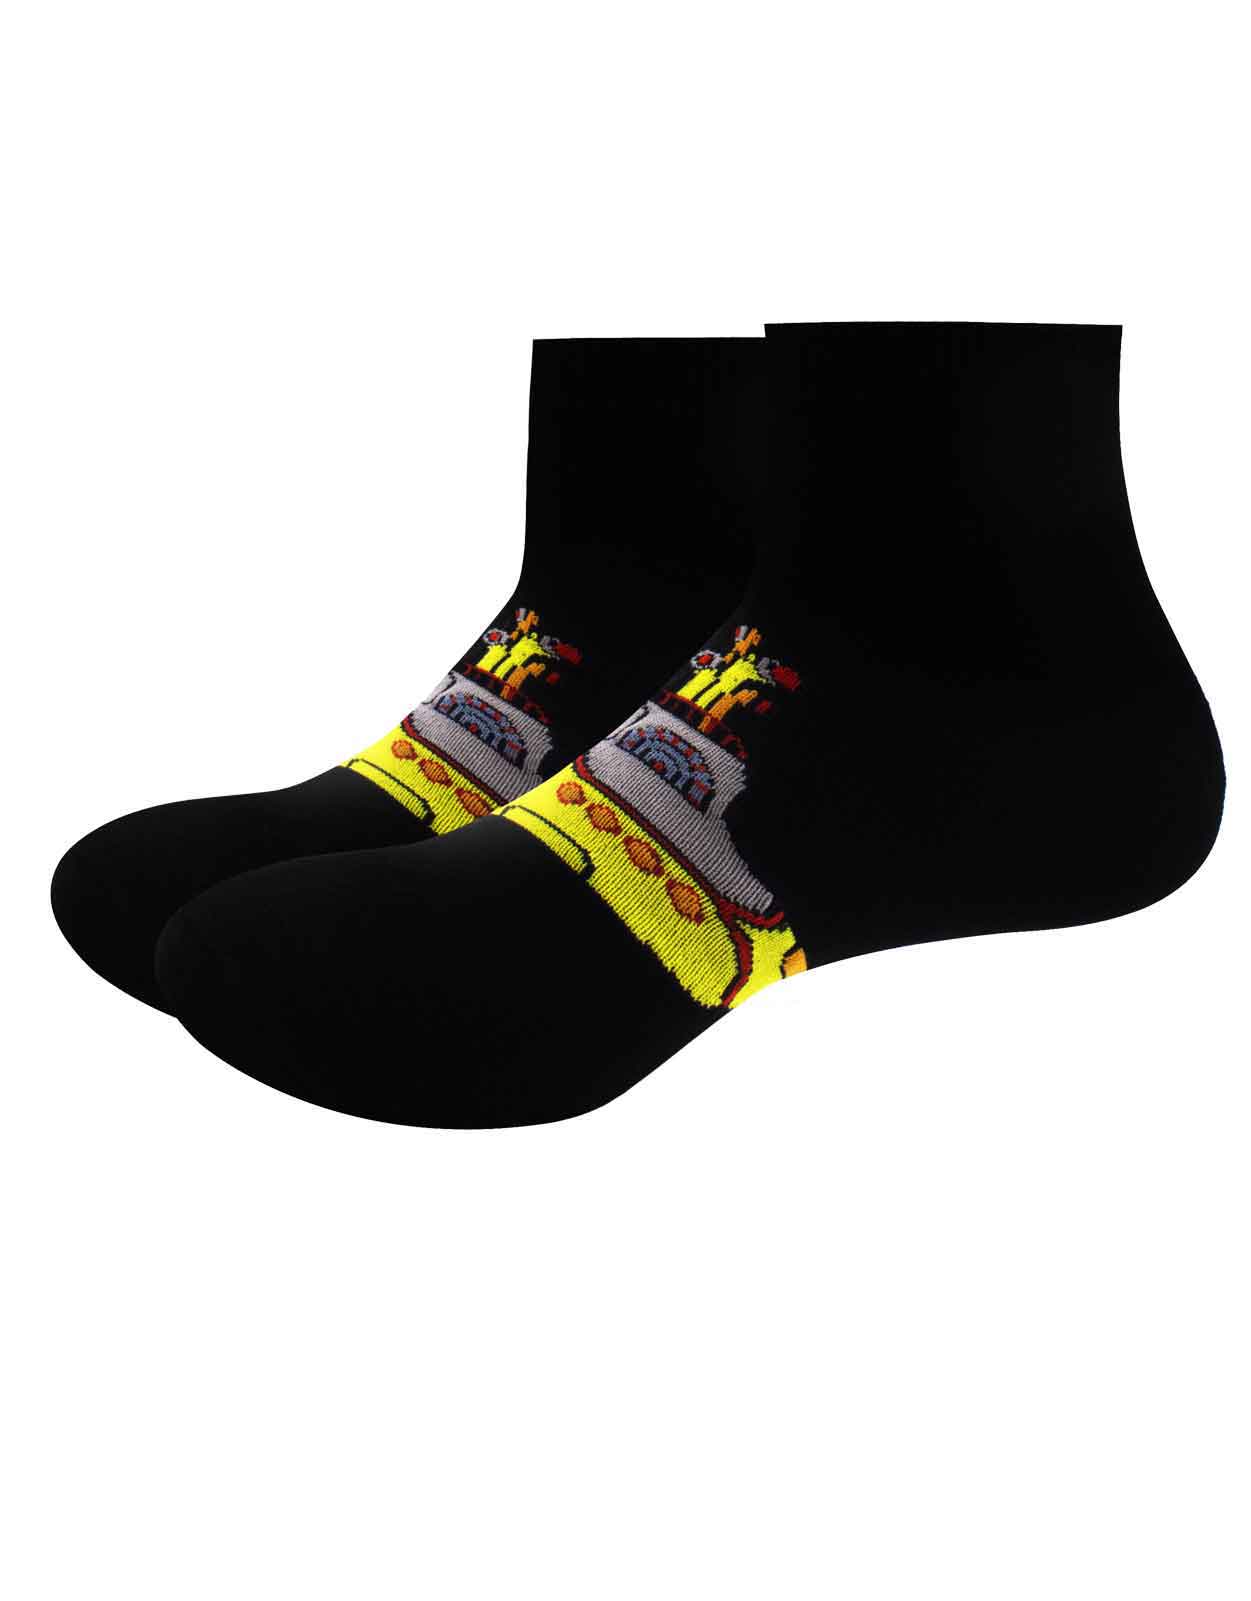 The Beatles Yellow Submarine Ankle Socks